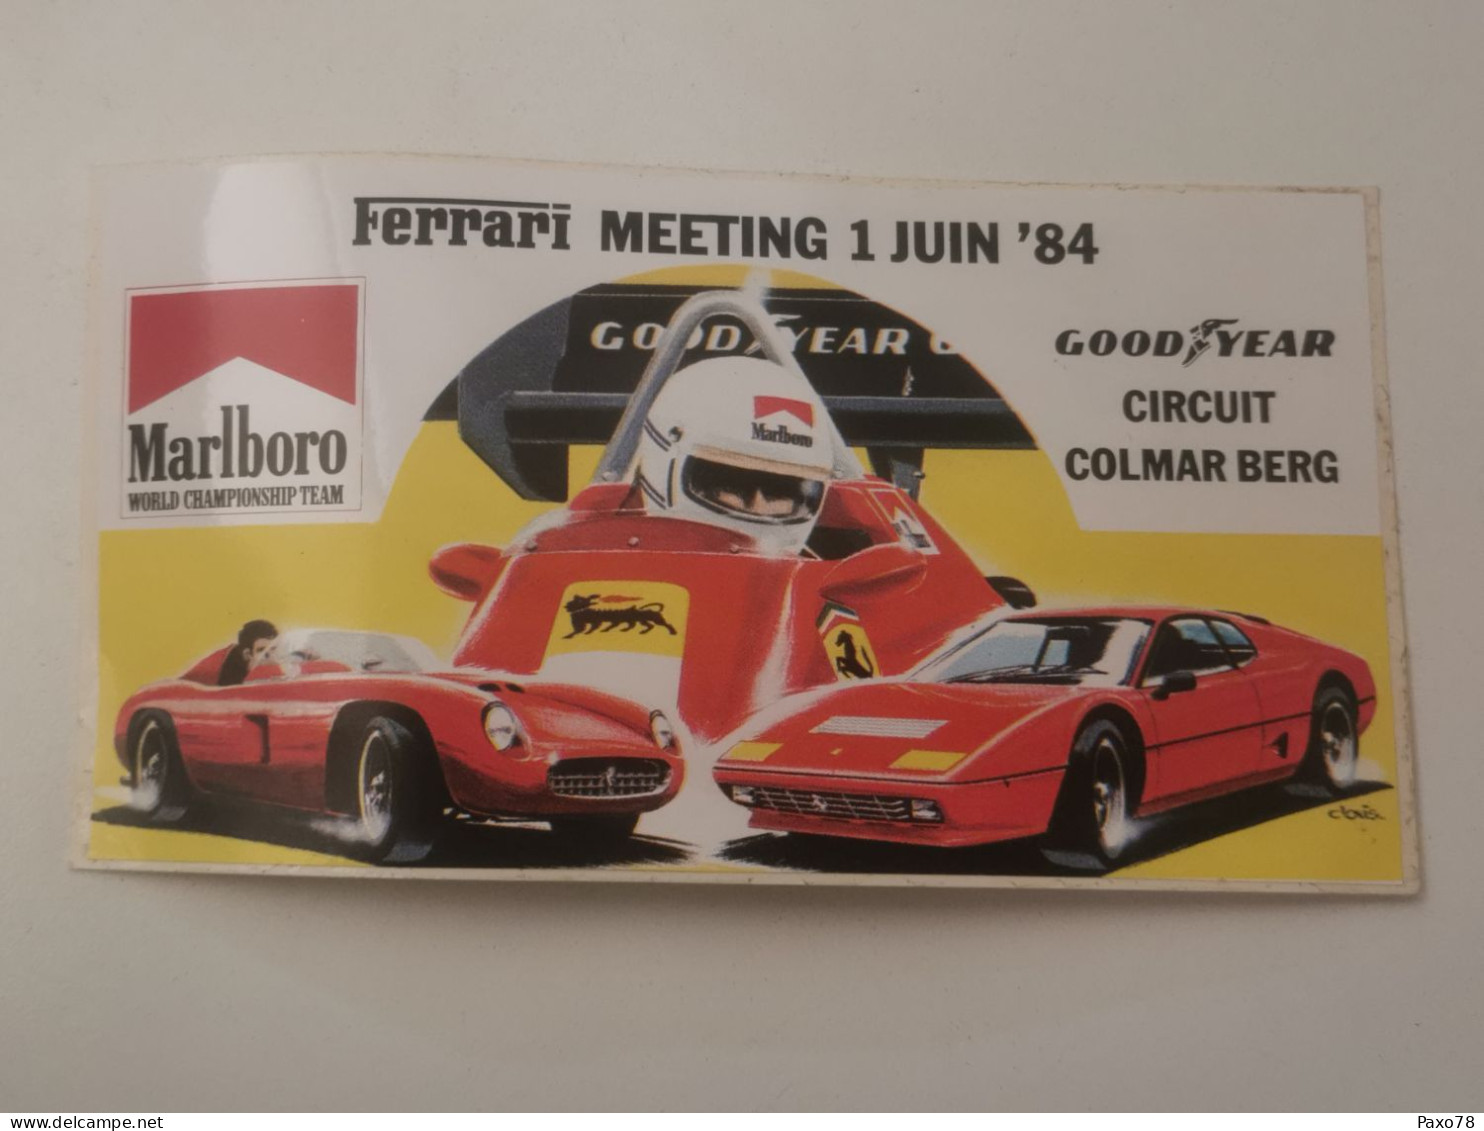 Autocollant Publicitaire, Ferrari Meeting, Circuit Colmar-berg Luxembourg 1984 - Stickers